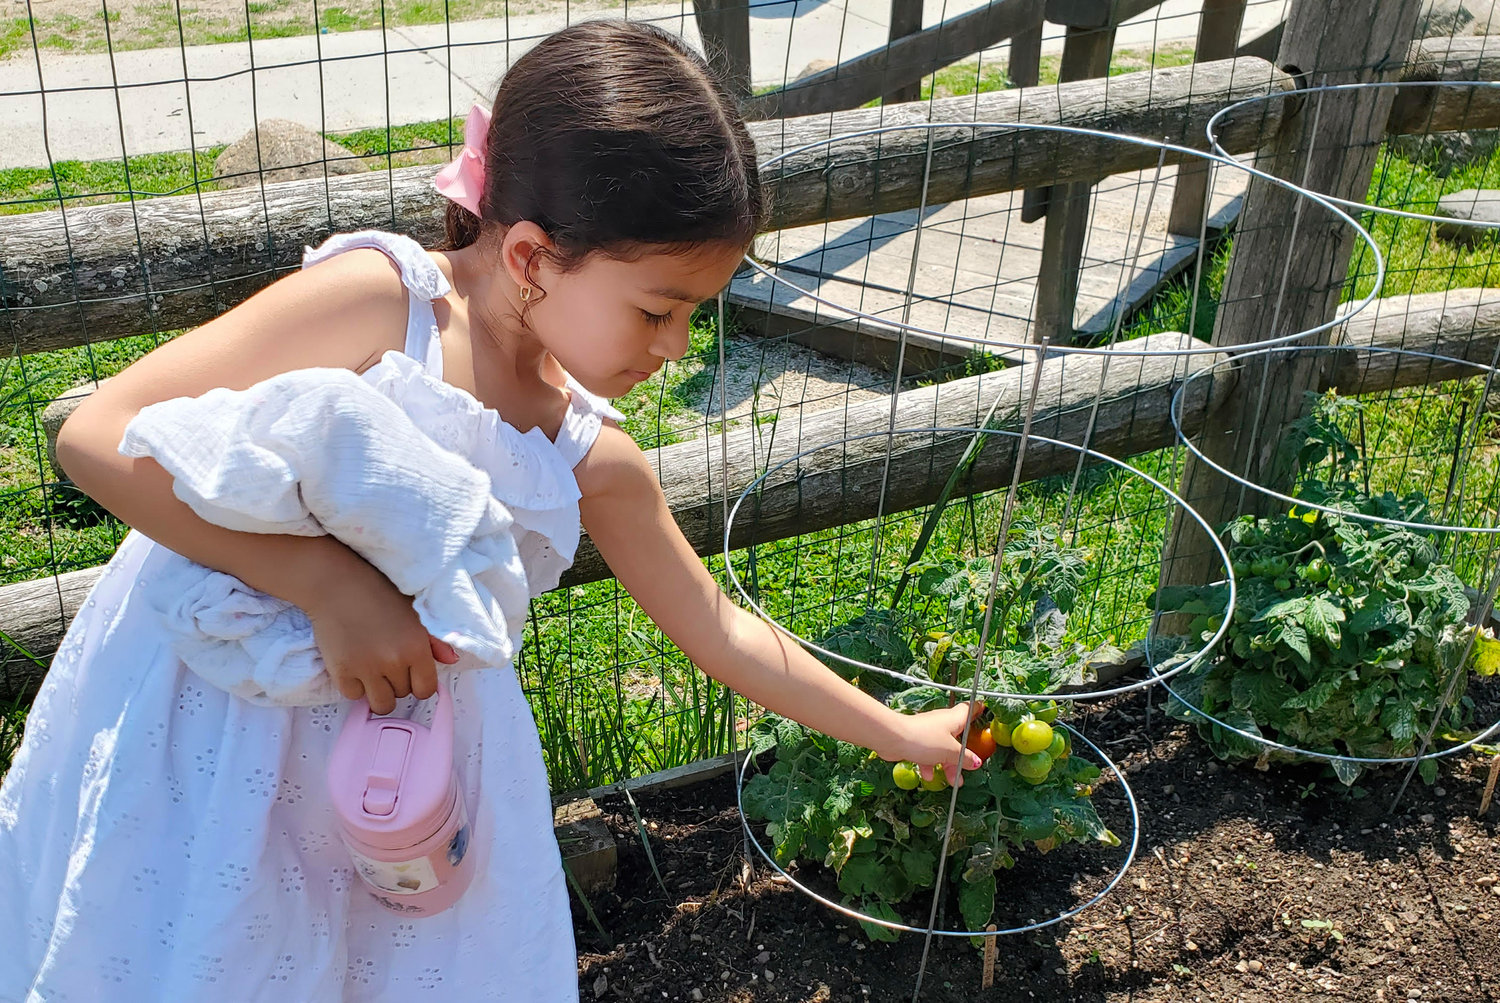 Lyana Rivera helps her mom Ana Acevedo in the Summit Community Garden